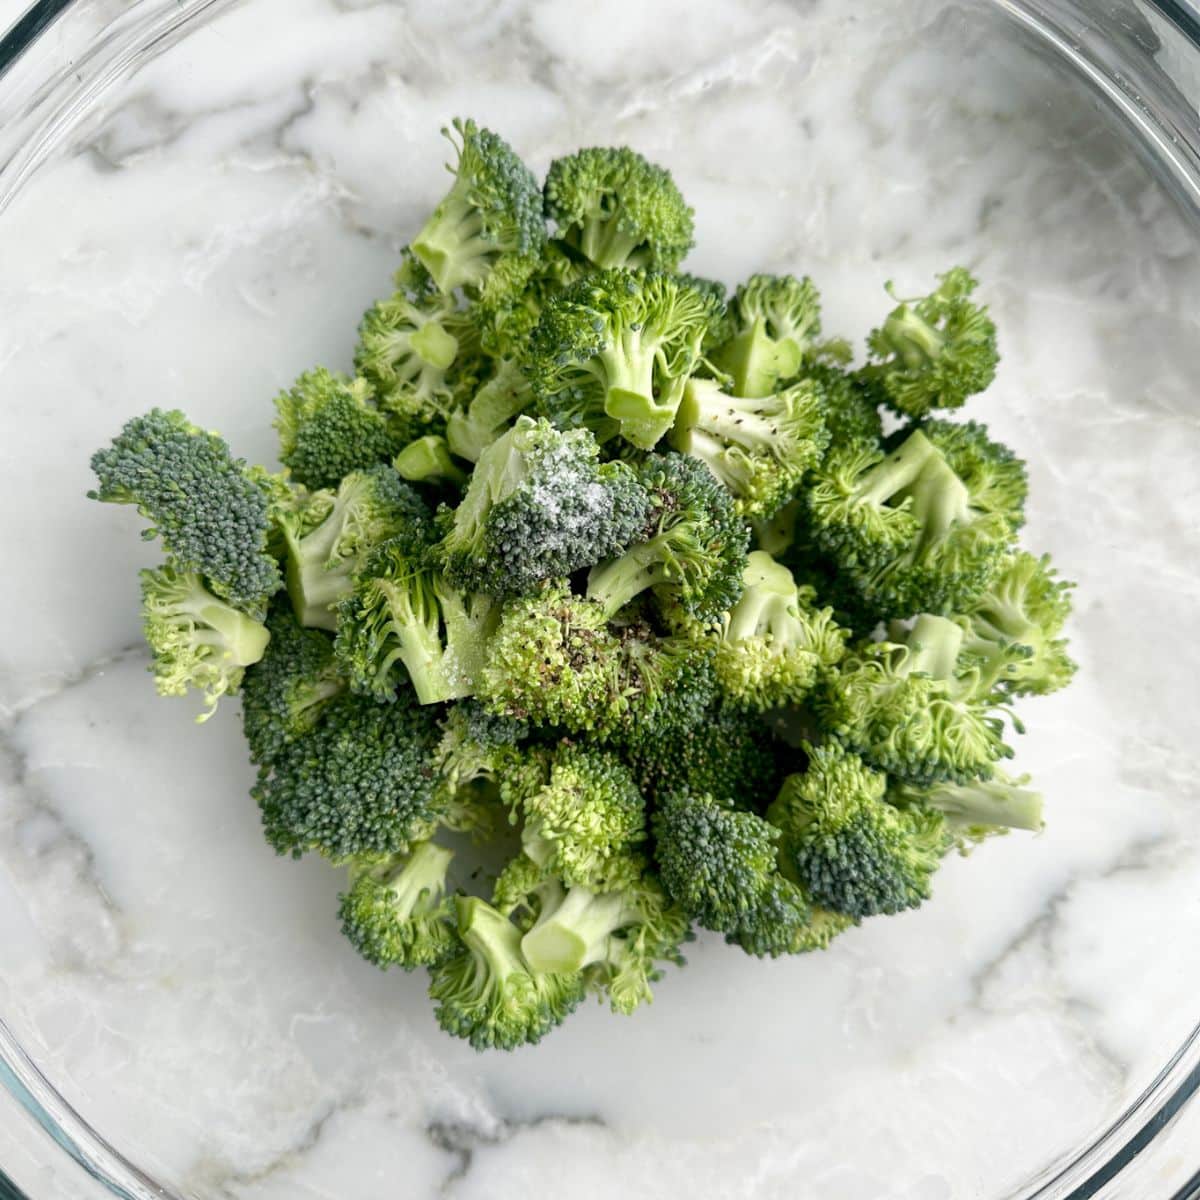 A bowl of broccoli florets.